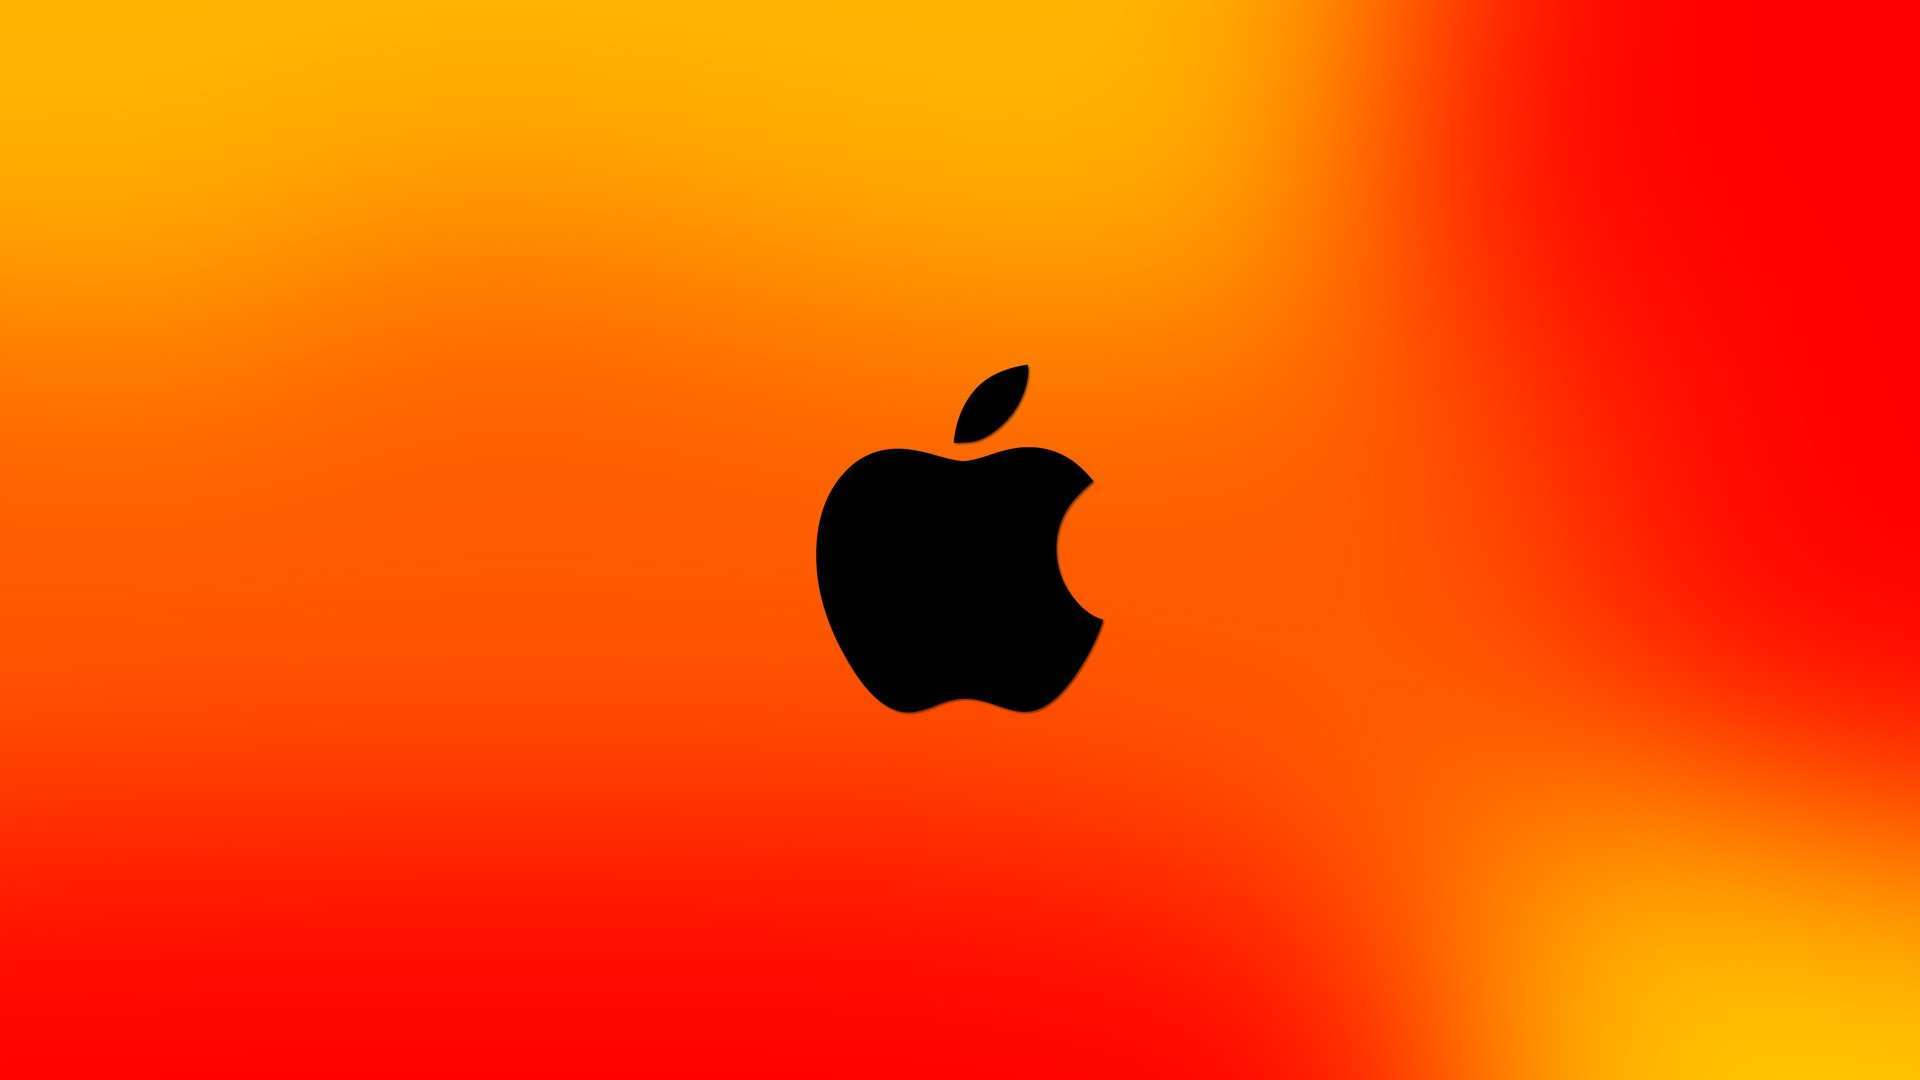 Fondosde Pantalla Hd Del Logotipo De Apple. Fondo de pantalla